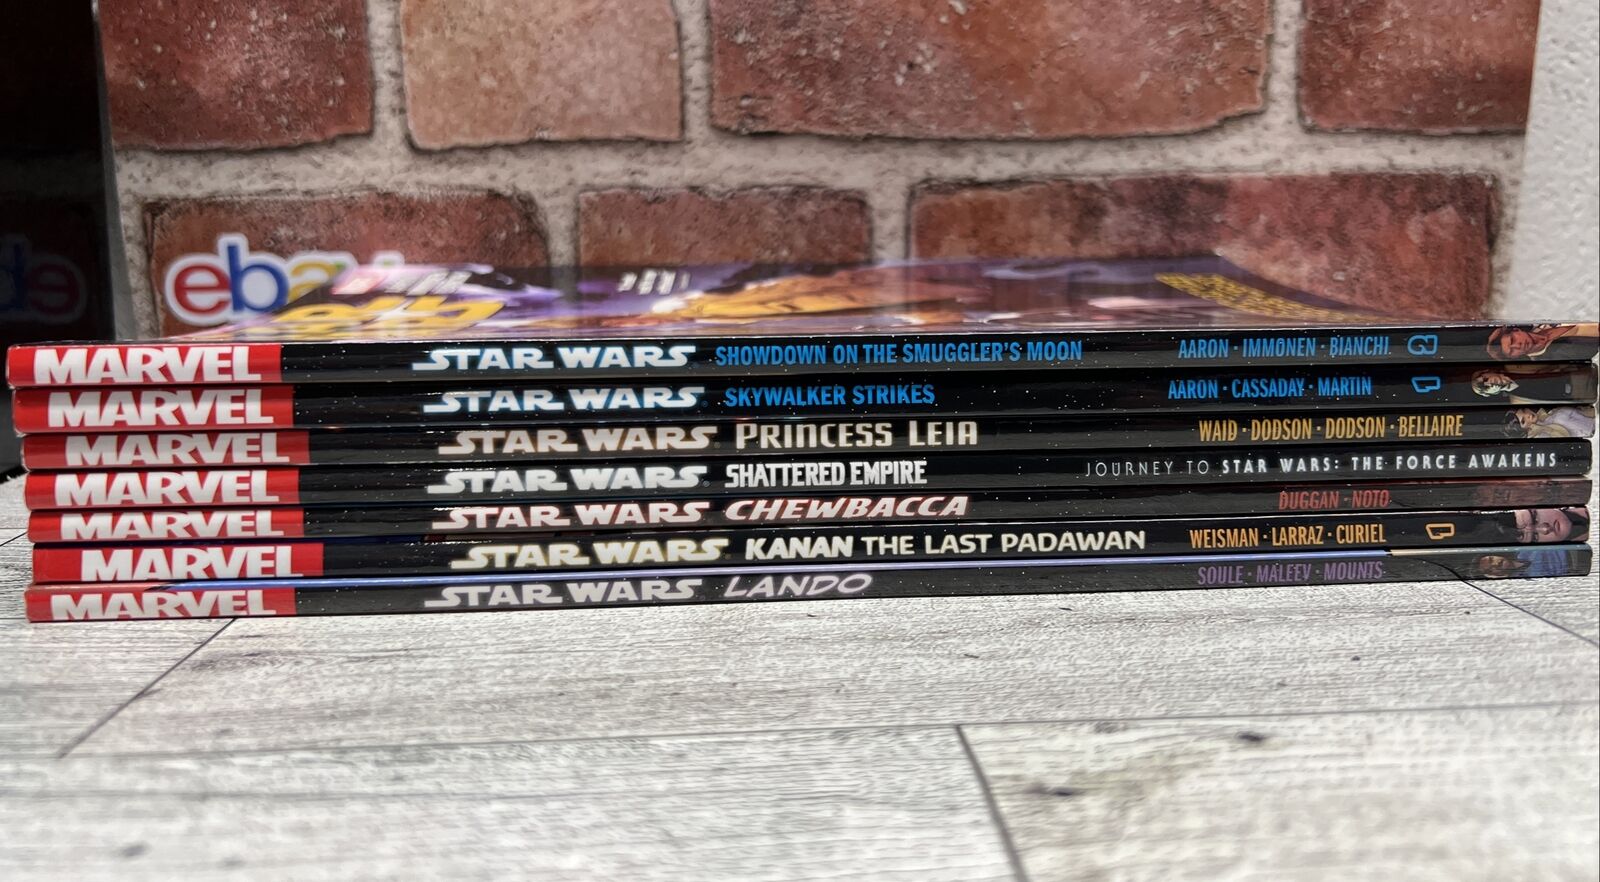 Star Wars Marvel Graphic Novels Comics-Chewbacca, Princess Leia, Lando Lot Of 7